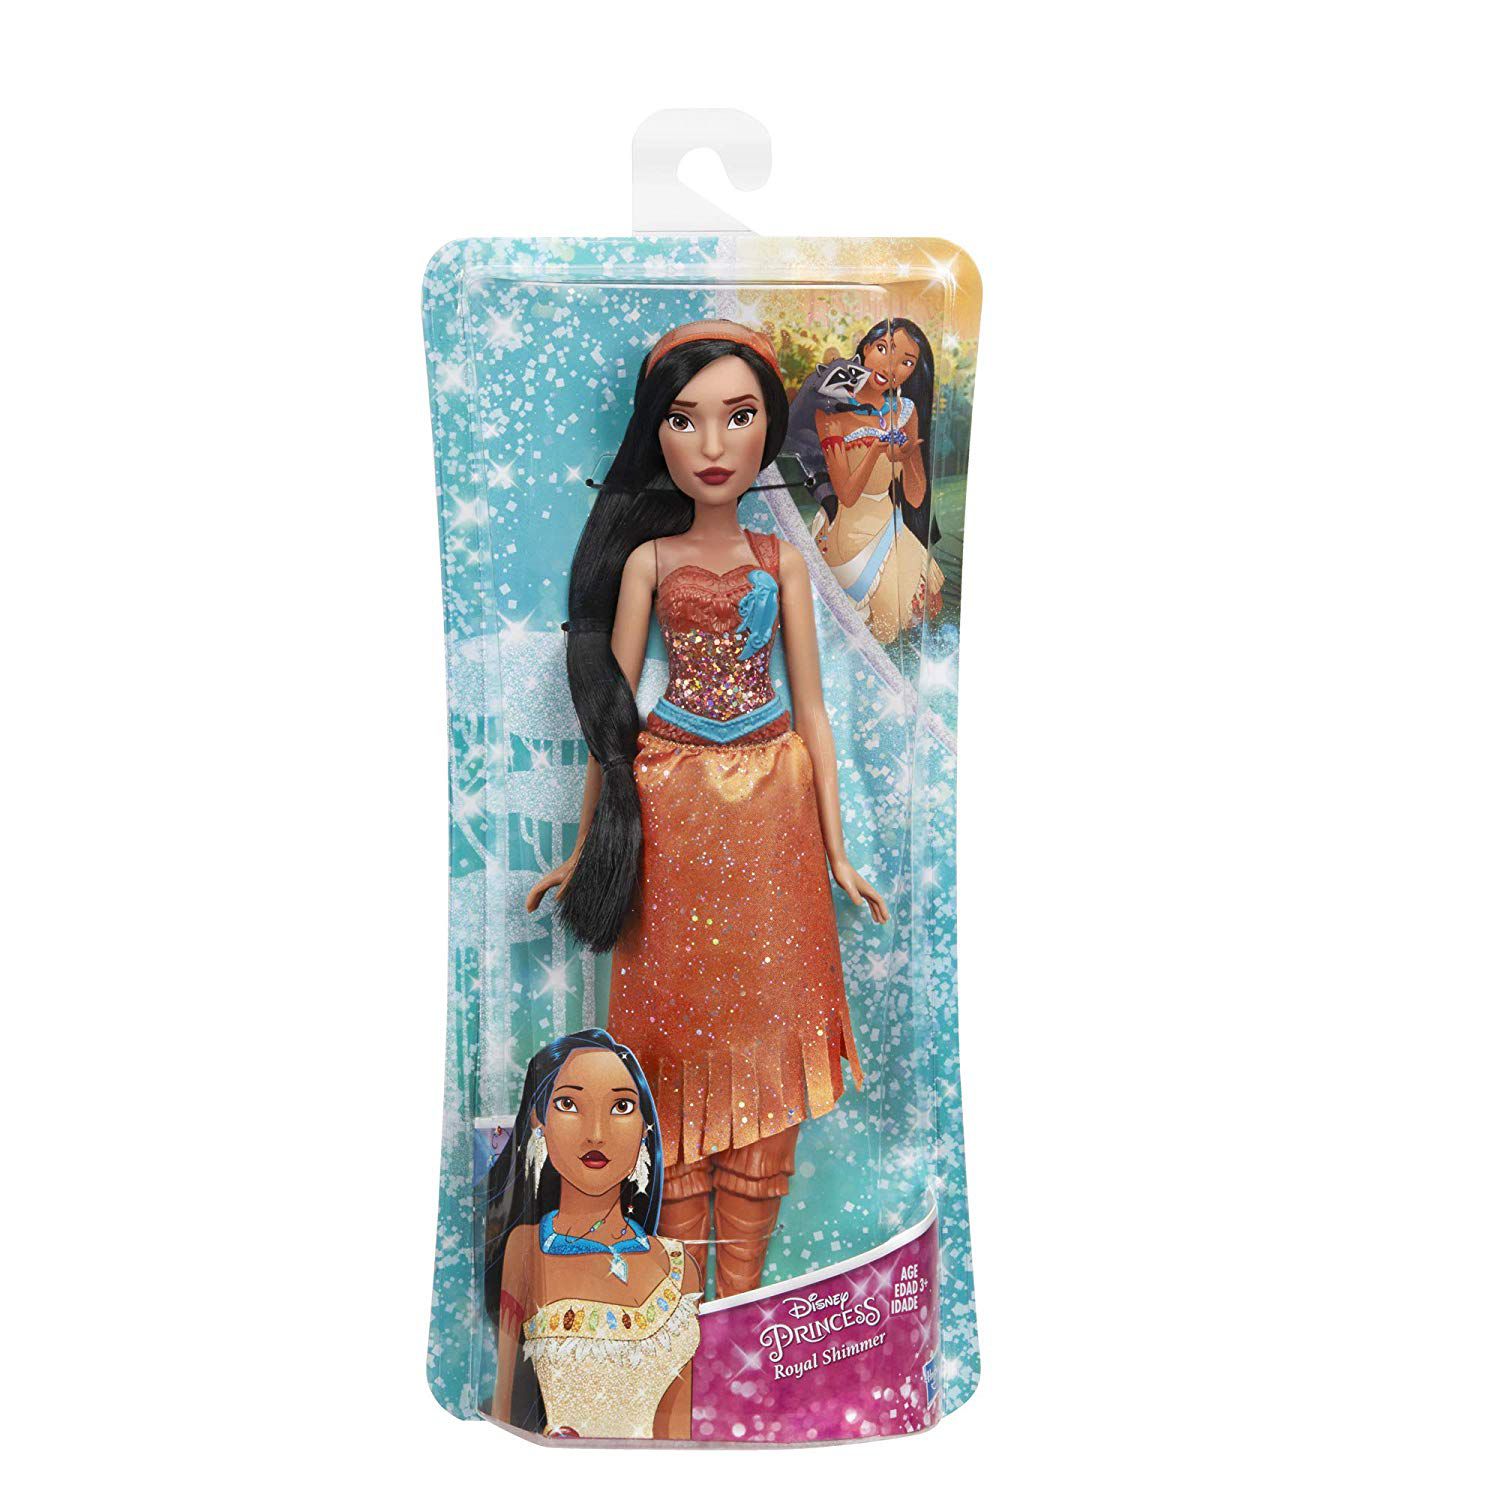 Boneca Disney Princess Shimmer Pocahontas Oficial Licenciado